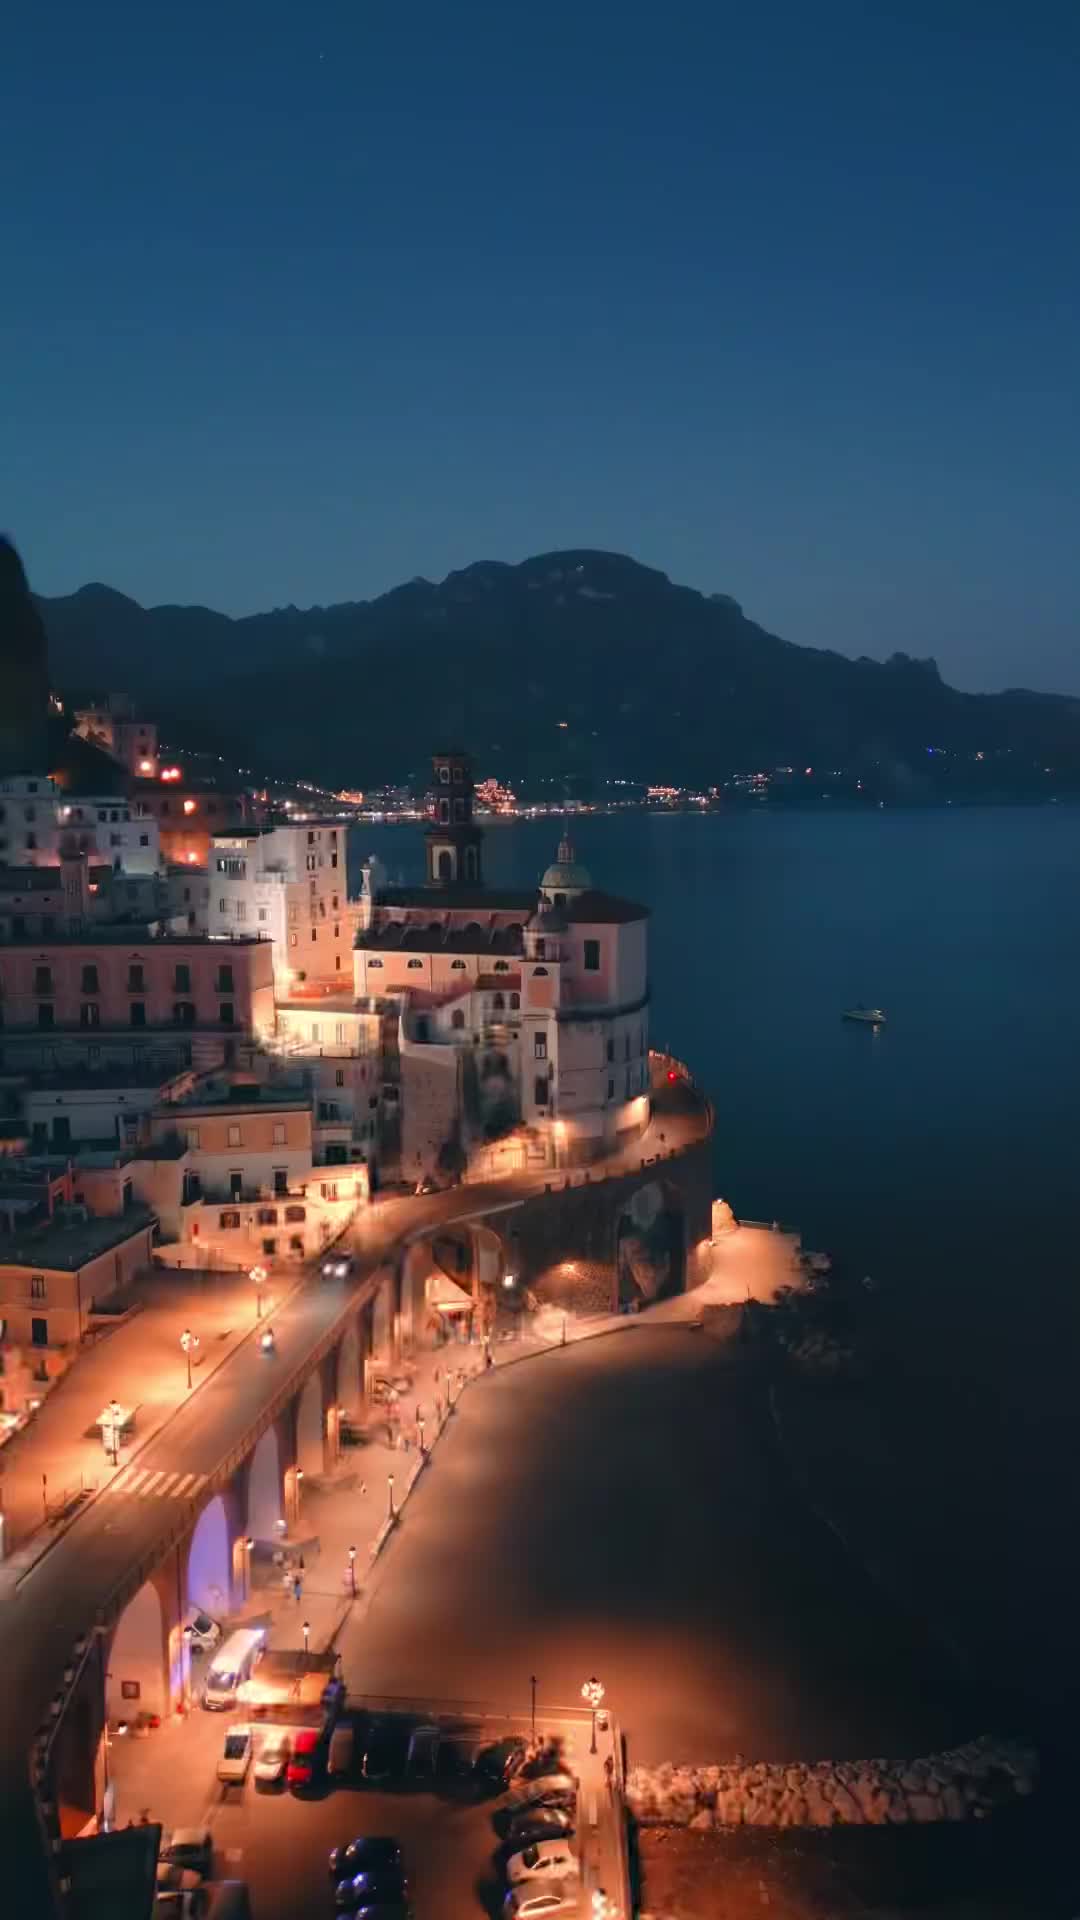 Atrani: The Illuminated Gem of the Amalfi Coast